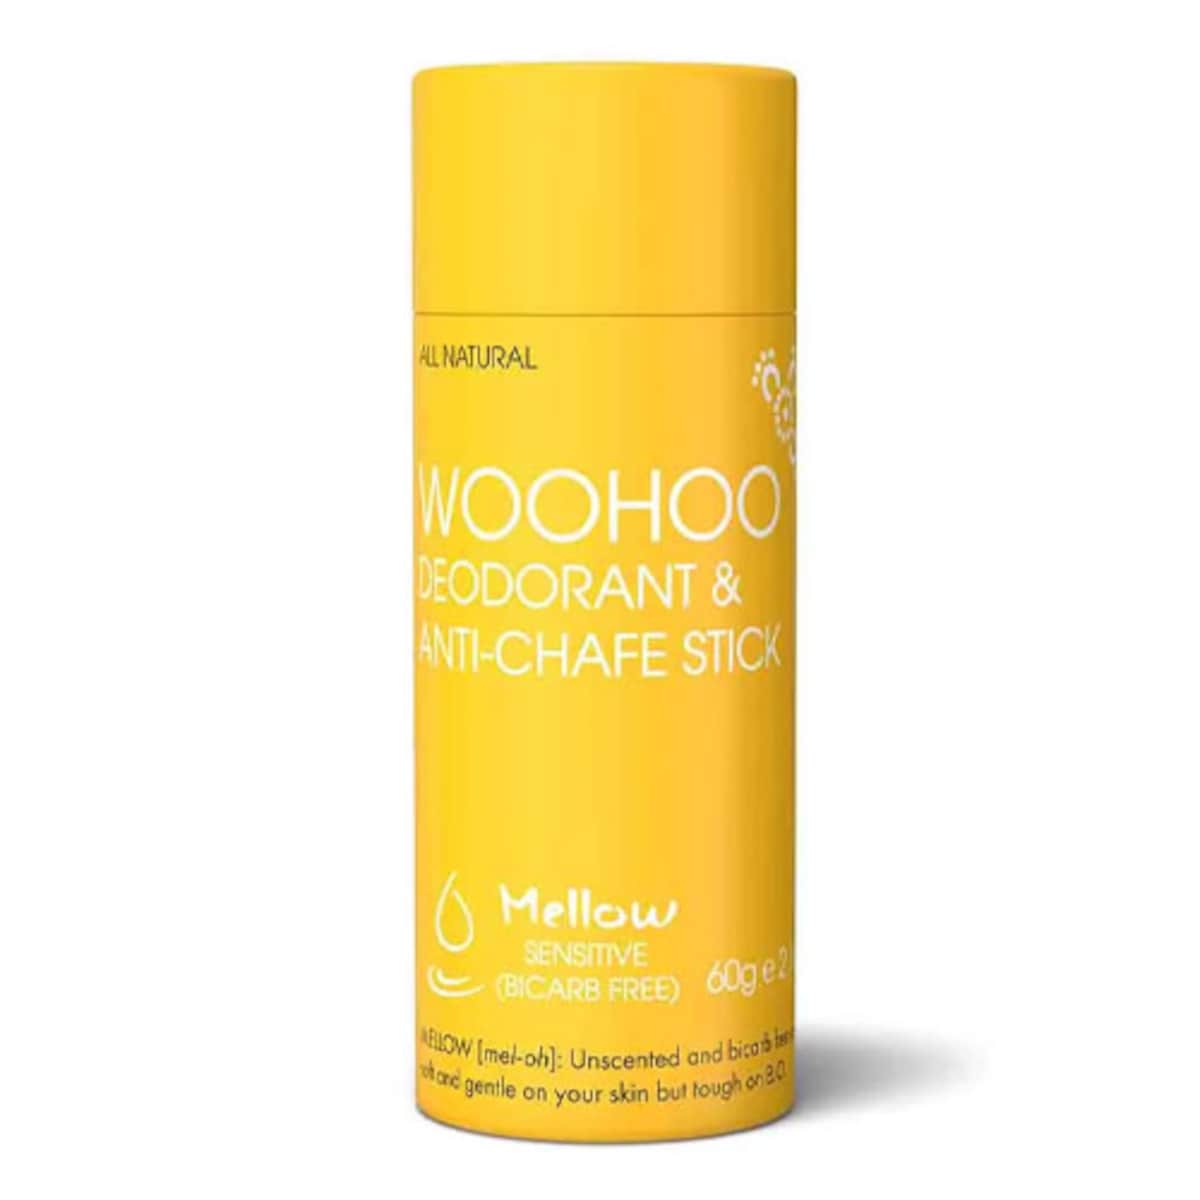 Woohoo Body Deodorant & Anti-Chafe Stick Mellow Sensitive 60g